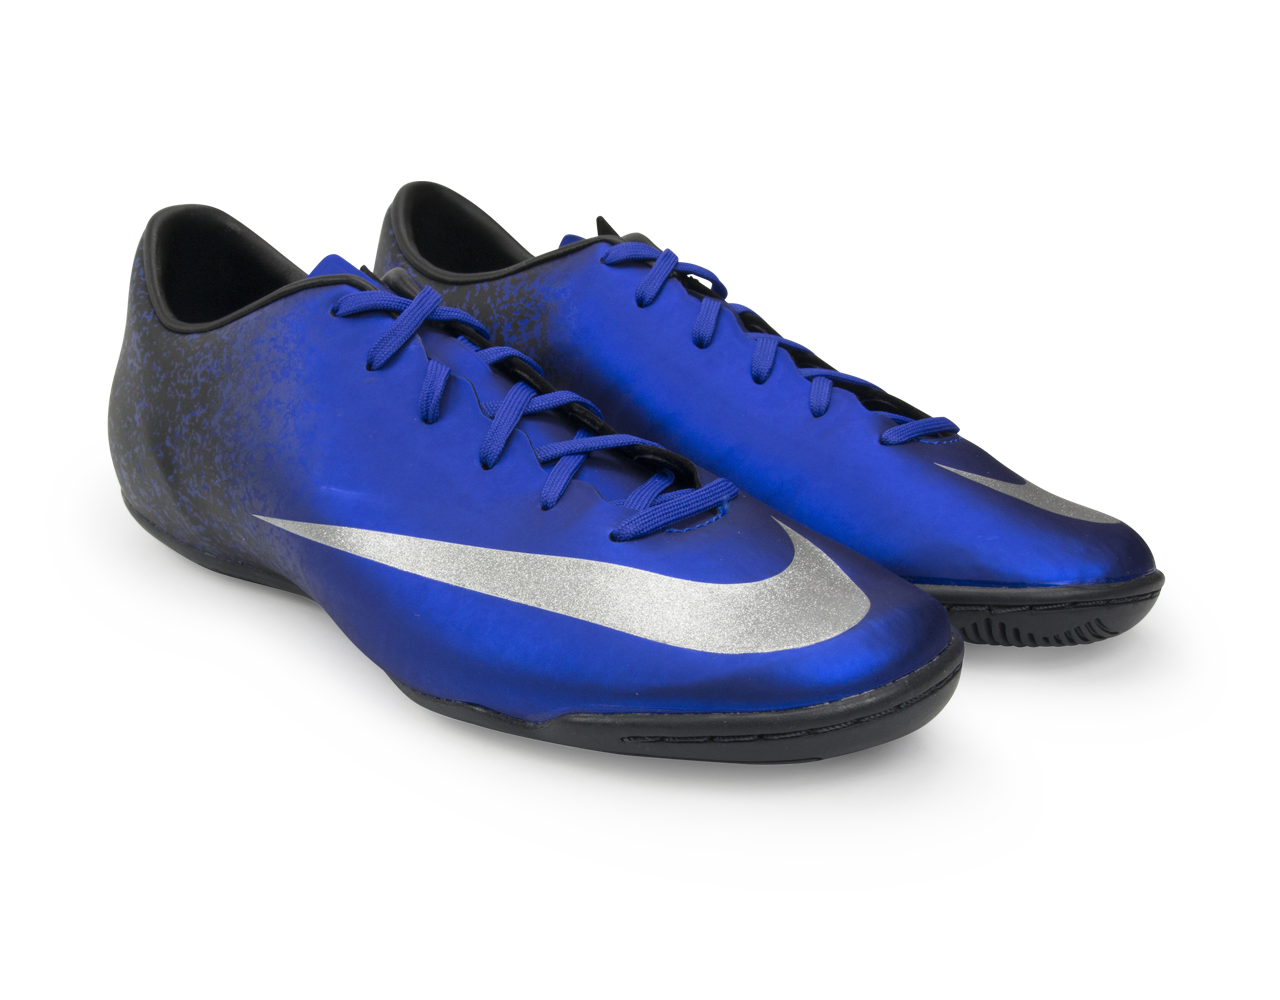 Nike Men's Mercurial Victory V CR7 Indoor Soccer Shoes Deep Royal Blue/Metallic Silver